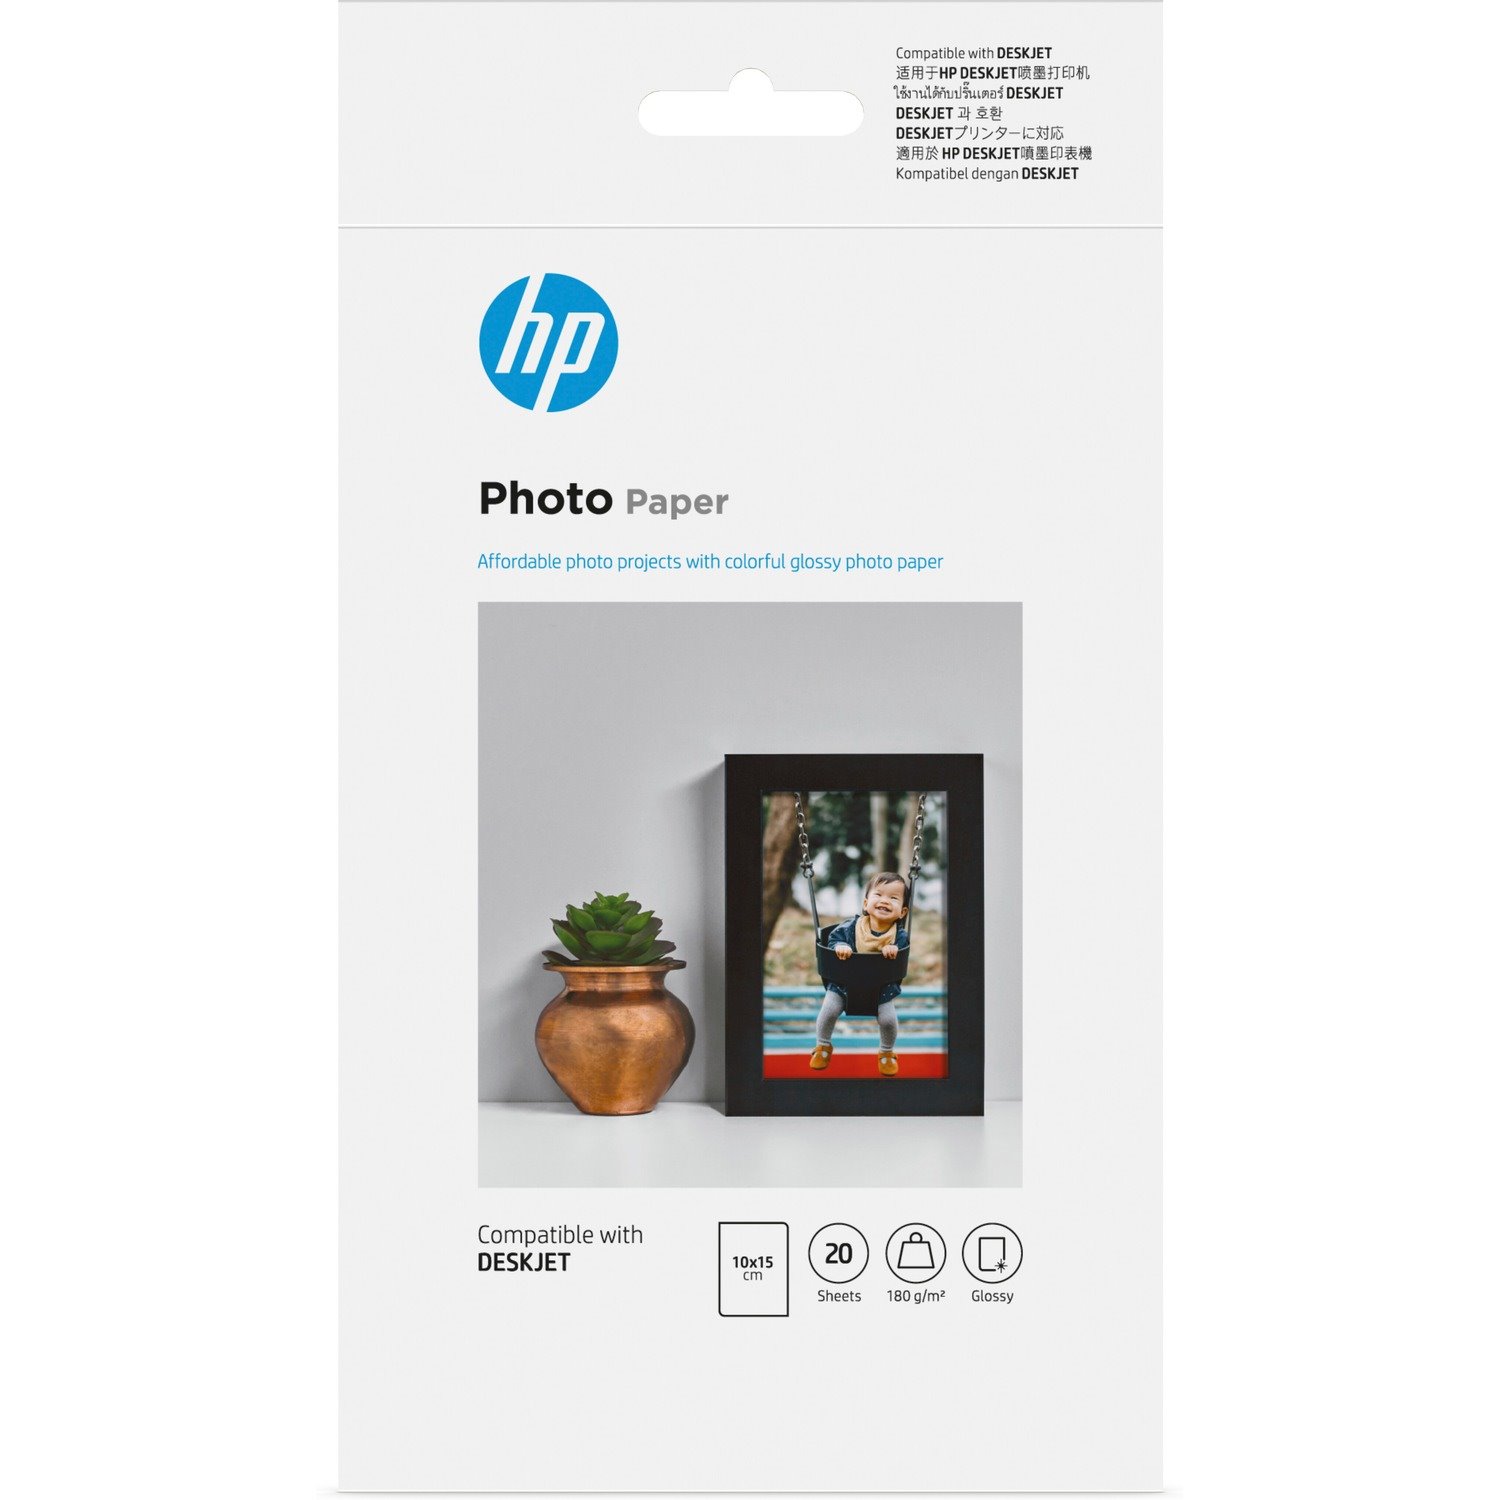 HP Advanced Thermal, Inkjet Photo Paper